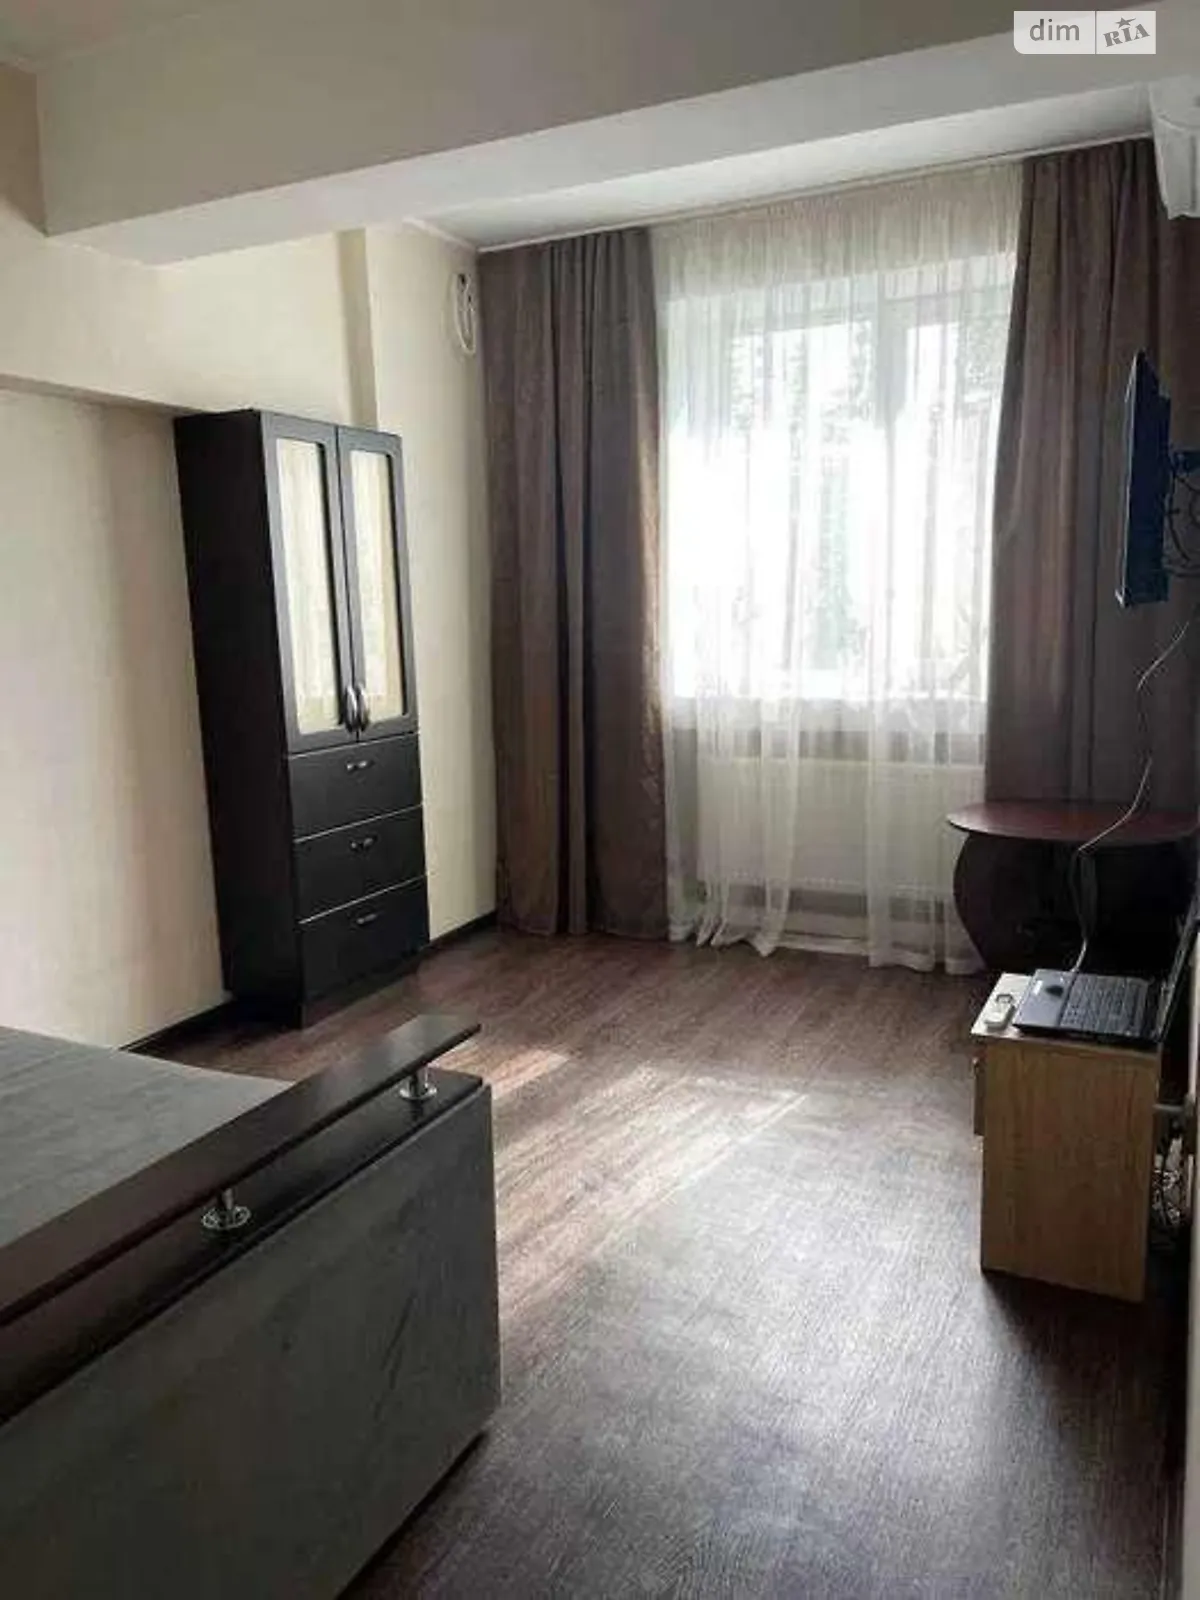 Продается комната 23 кв. м в Харькове - фото 3